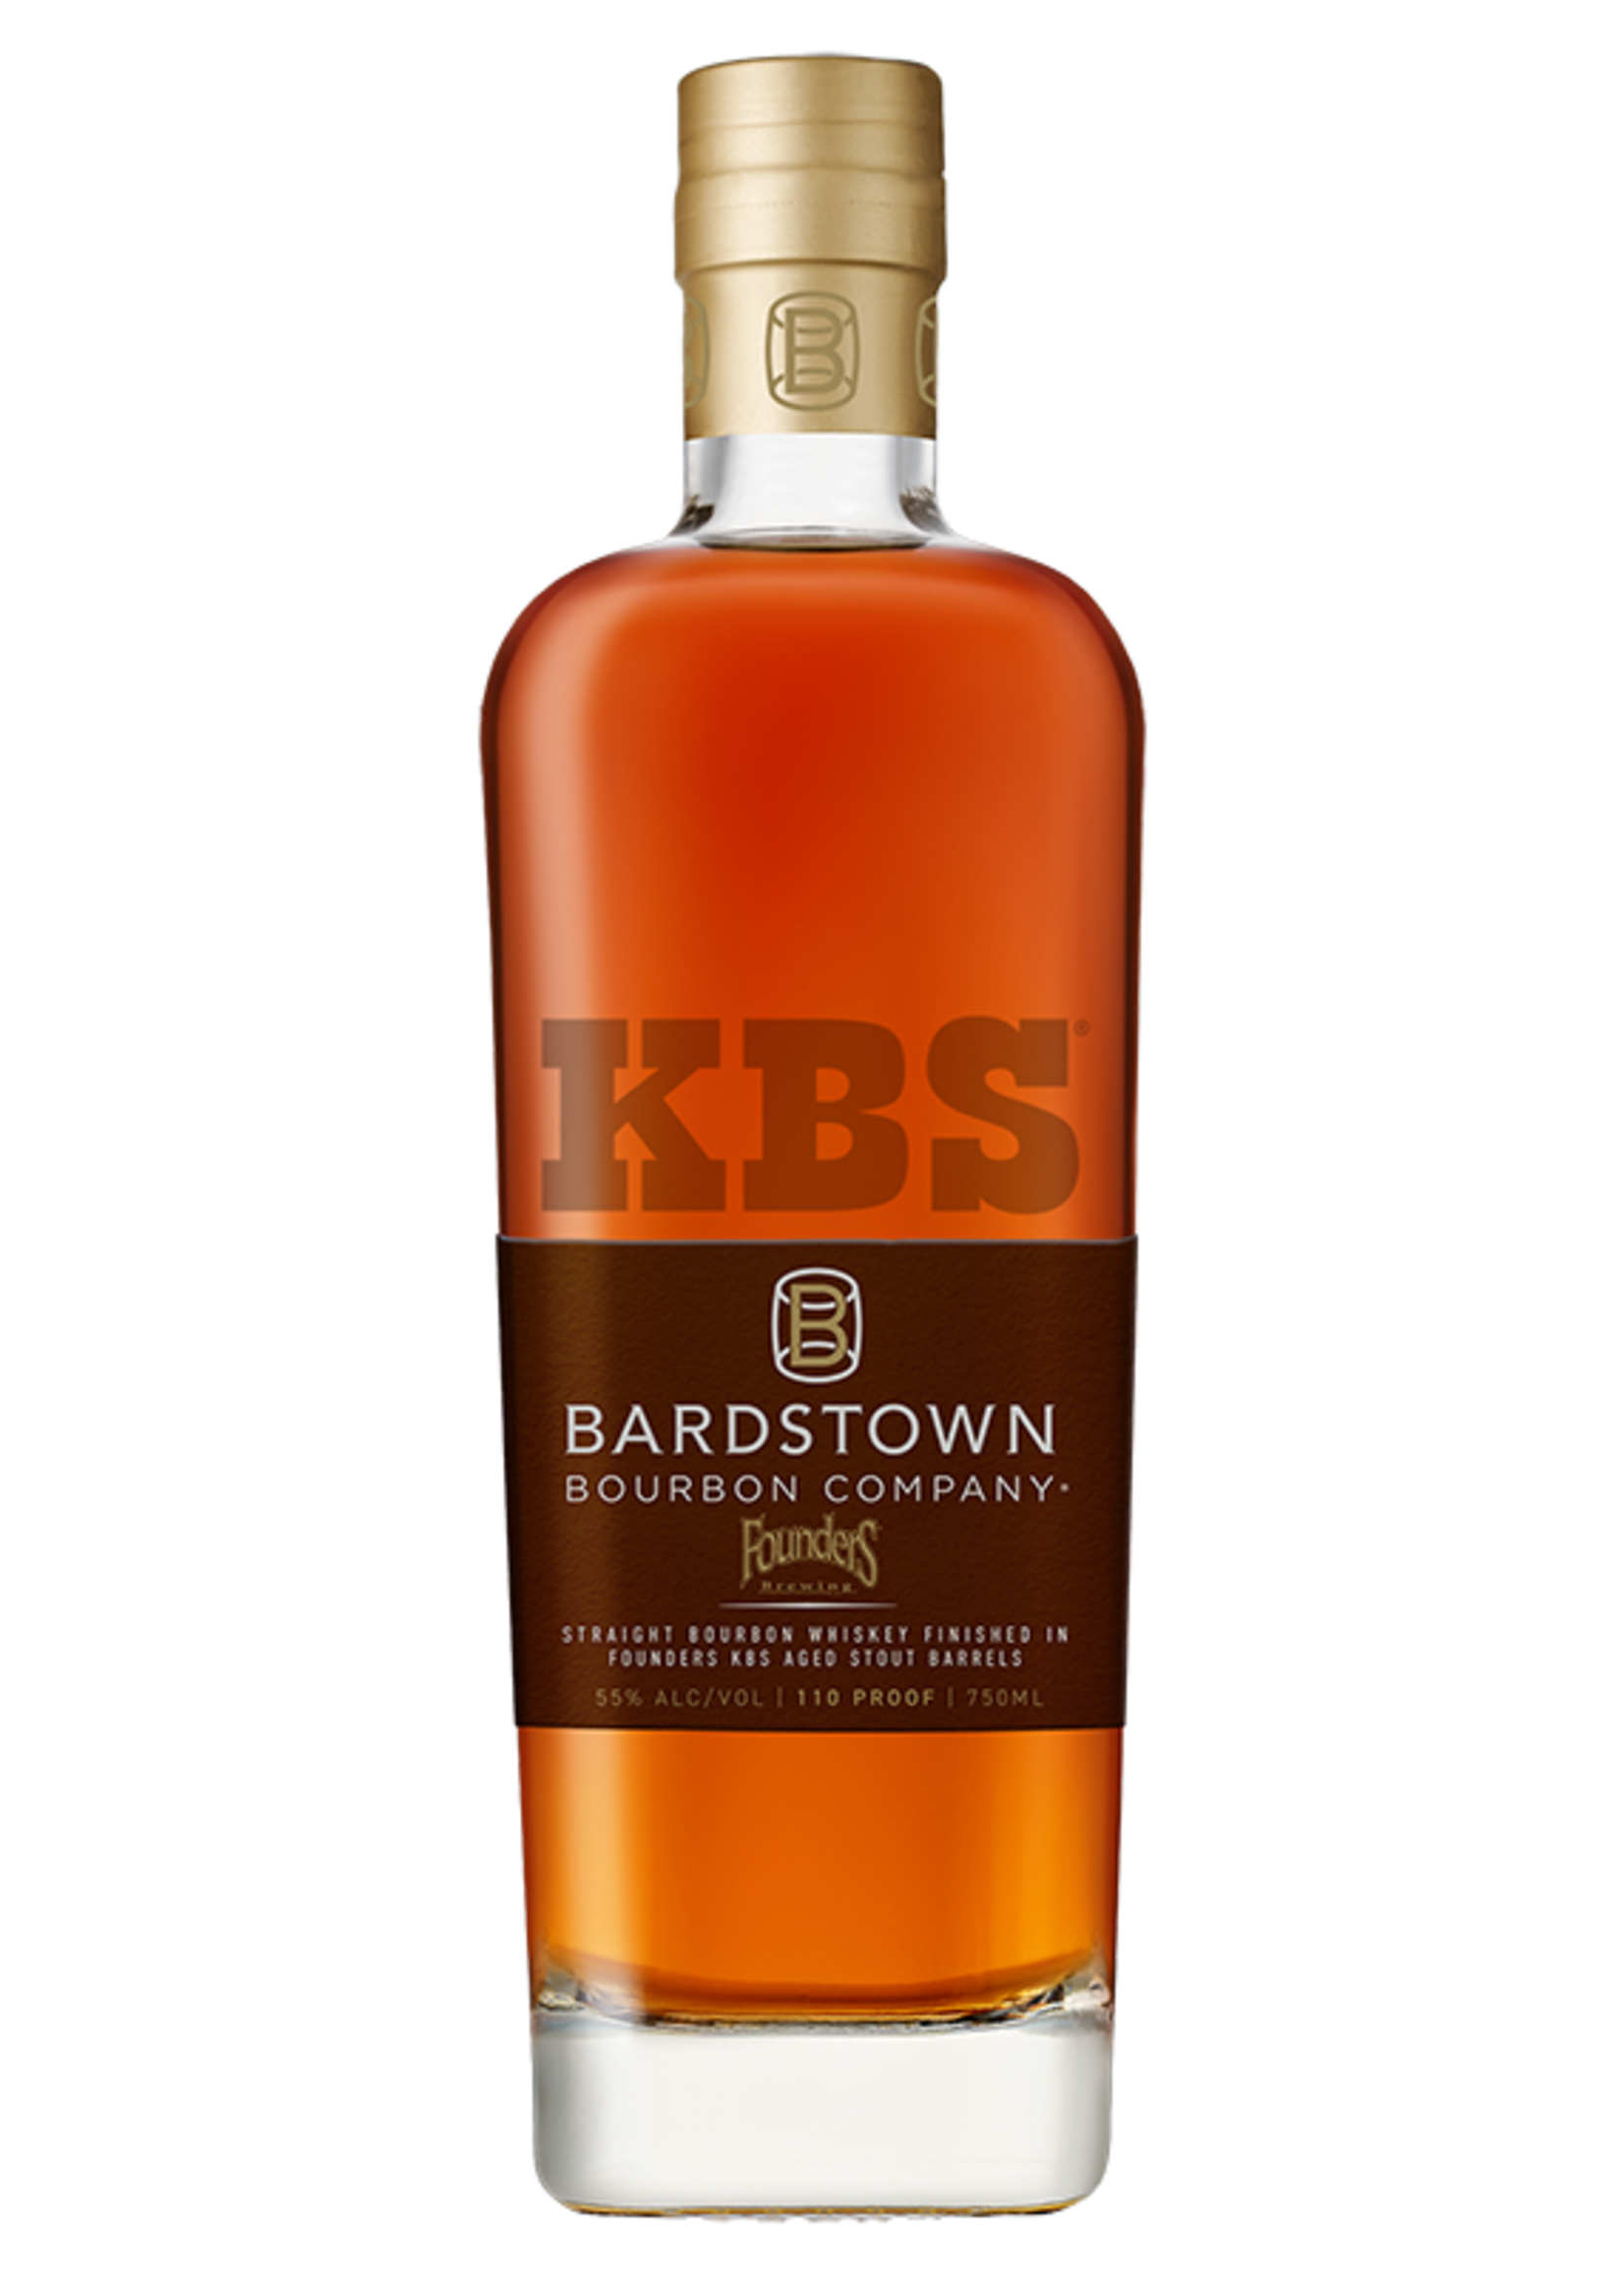 Bardstown Bourbon Company Bardstown / Founders KBS Cask 55% abv / 750mL